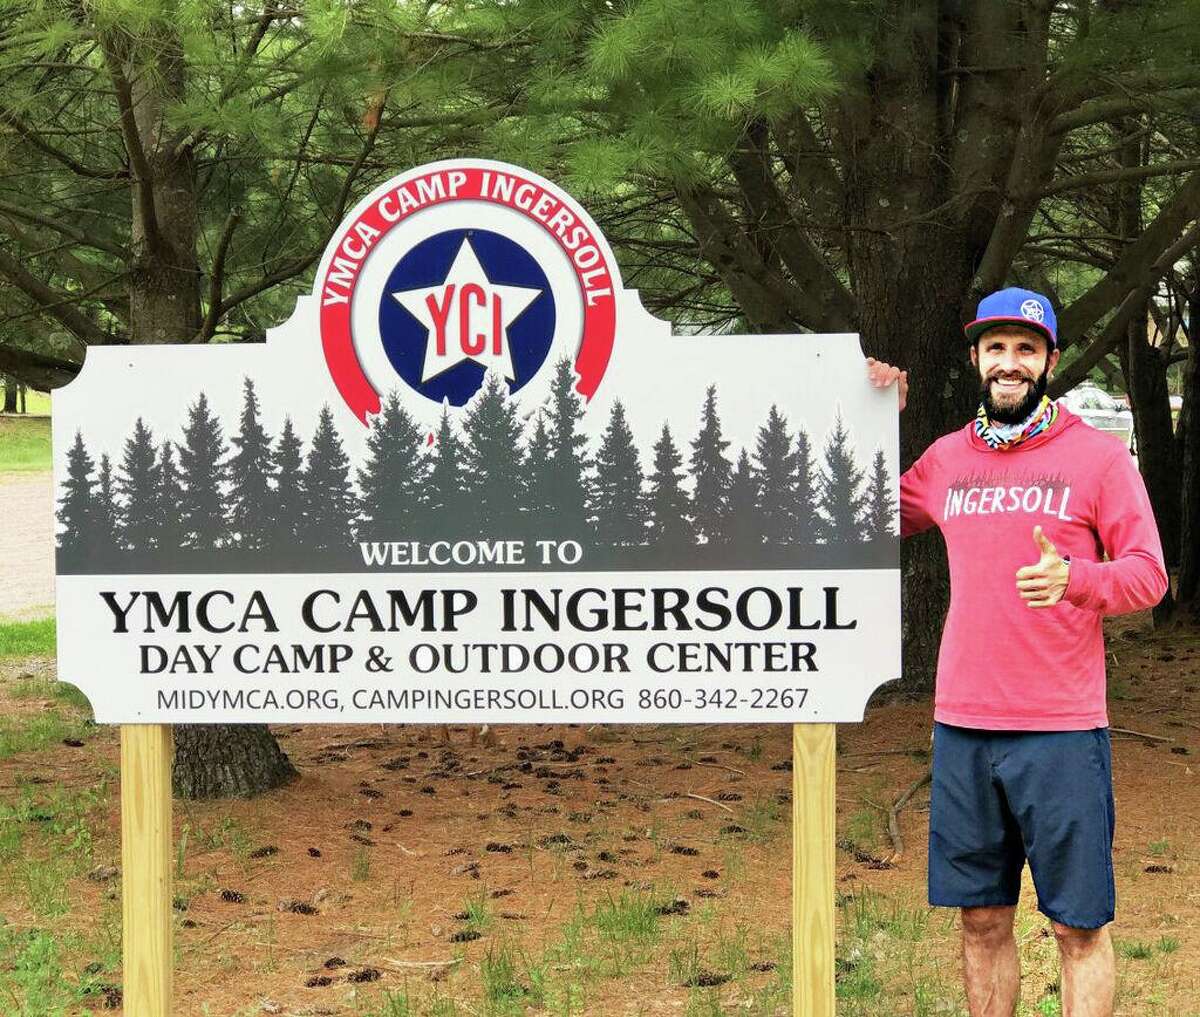 Ben Silliman is the director of YMCA Camp Ingersoll in Portland.